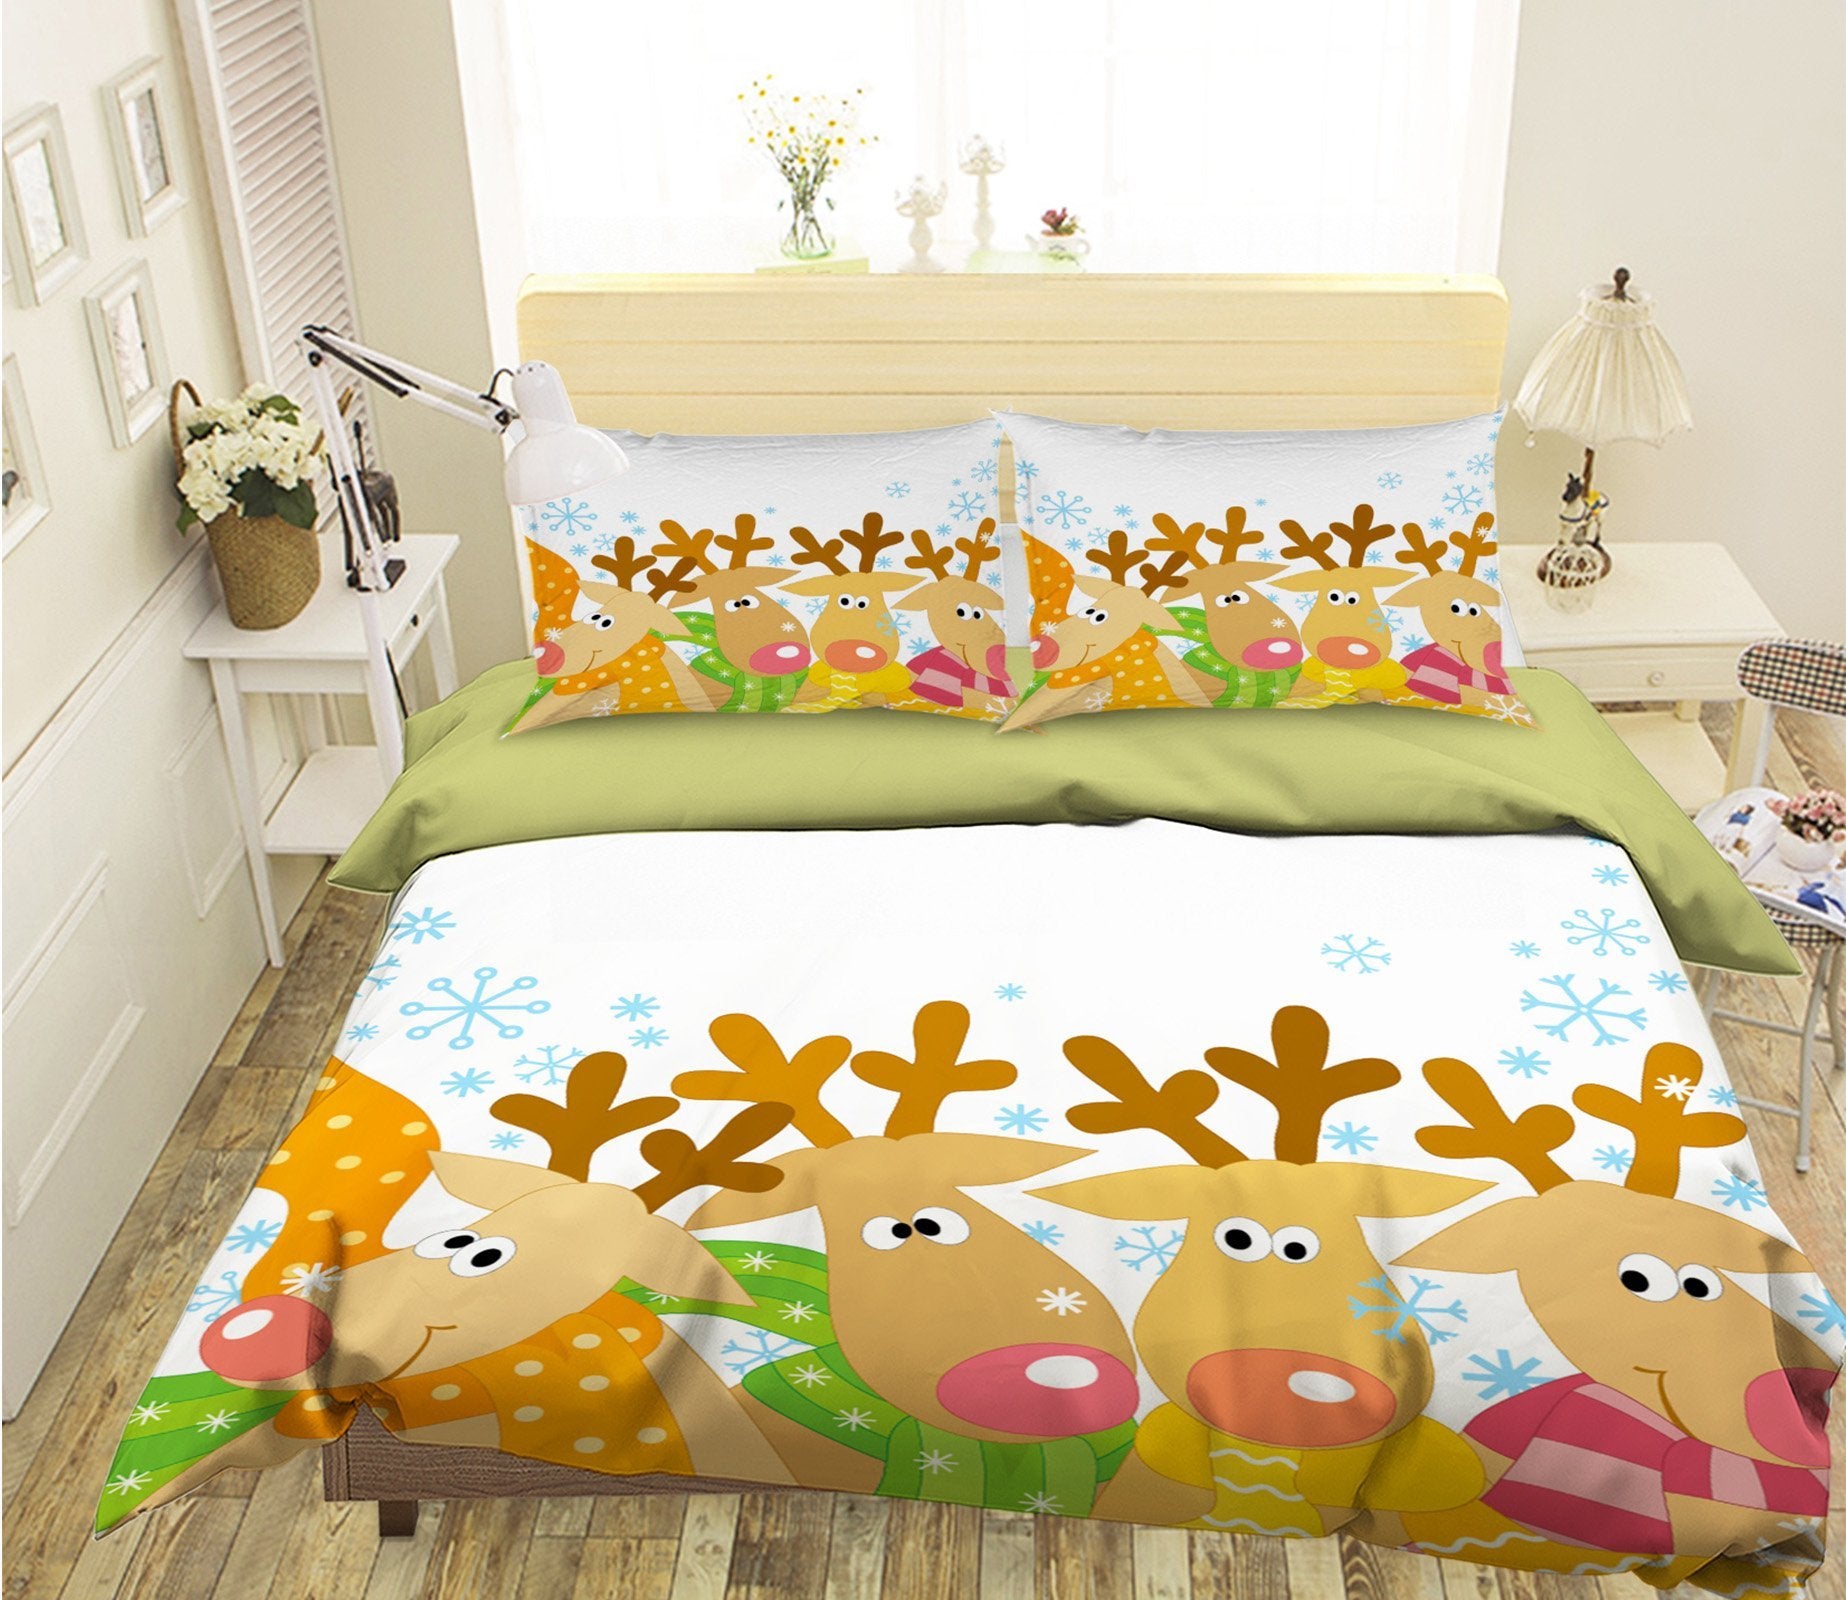 3D Christmas Cartoon Deer 6 Bed Pillowcases Quilt Quiet Covers AJ Creativity Home 